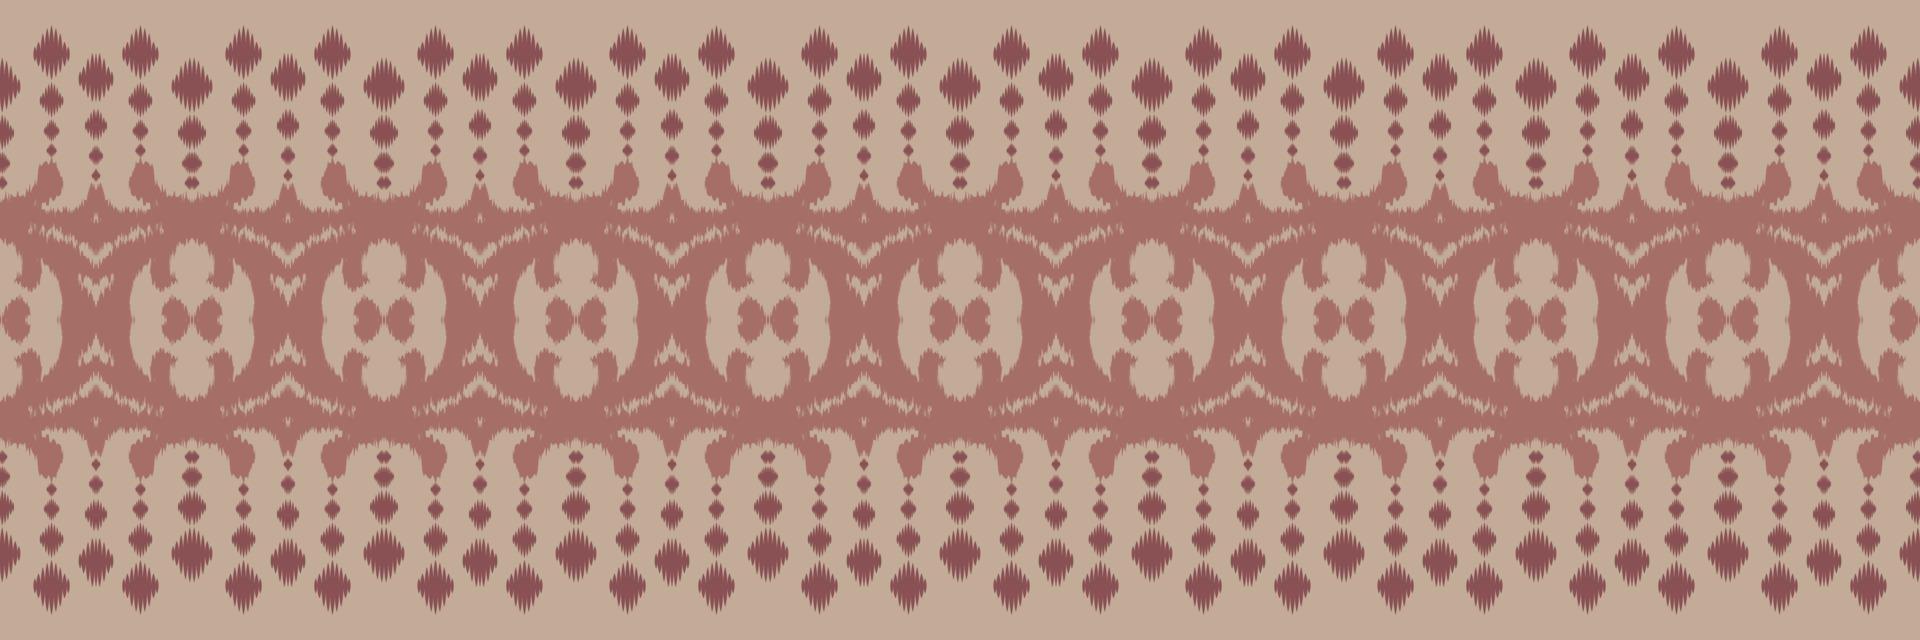 padrão sem emenda de cor tribal de fronteira ikat. étnico geométrico batik ikkat design têxtil de vetor digital para estampas tecido saree mughal pincel símbolo faixas textura kurti kurtis kurtas